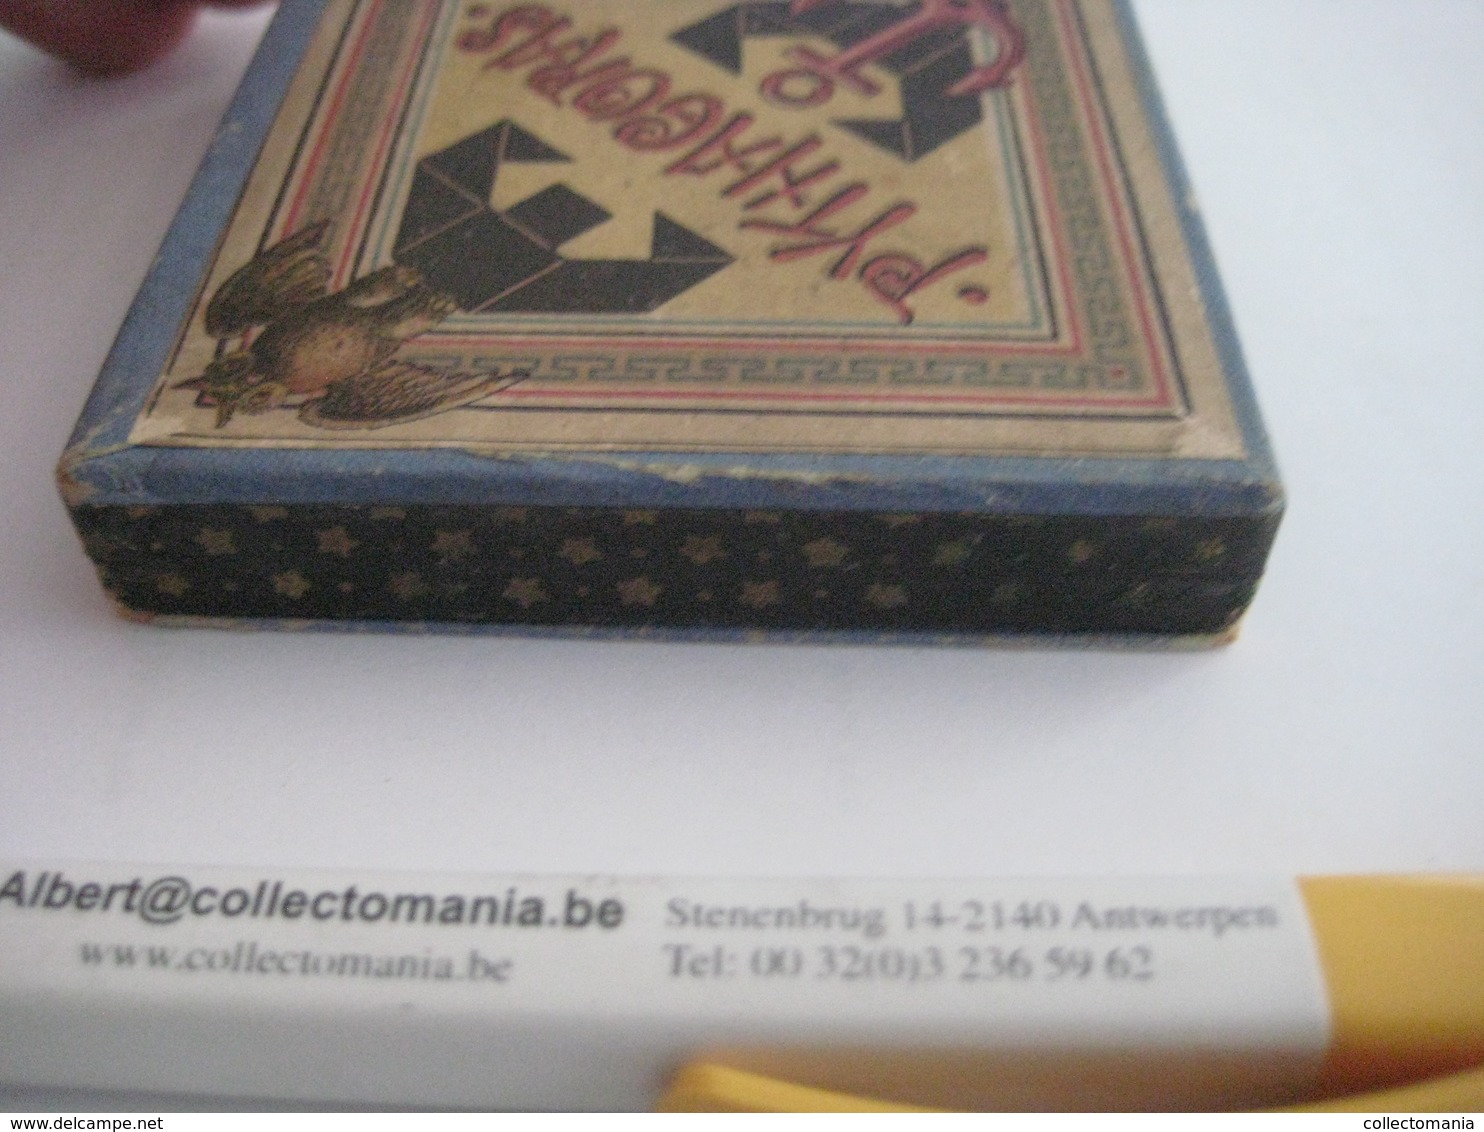 1 boite (doos, box) RARE c1900 litho problem PYTHAGORAS, complete perfect, with booklet, mit buchlein 9cmX9cm RICHTER